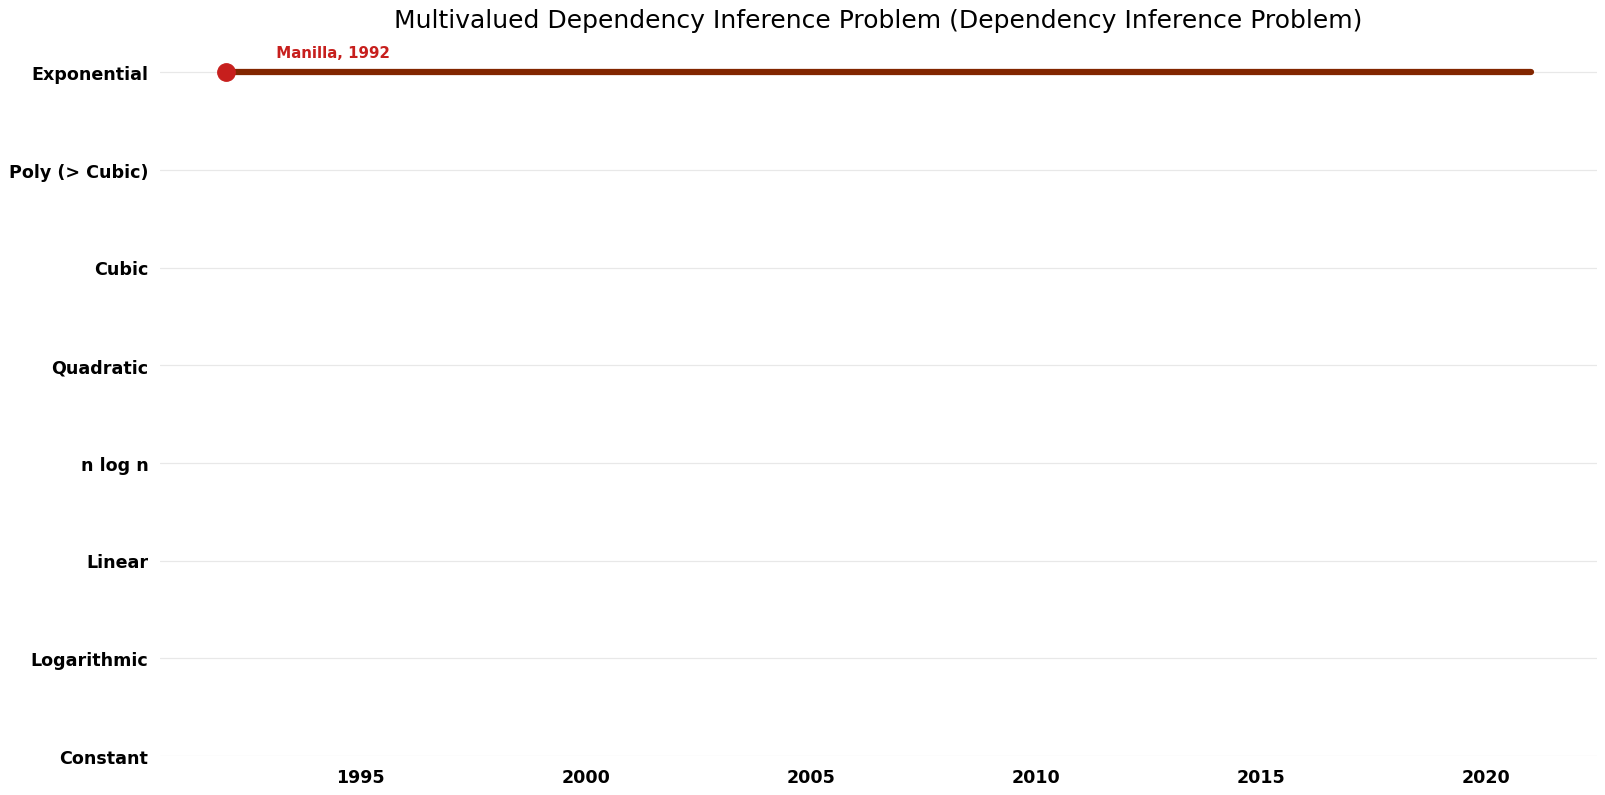 File:Dependency Inference Problem - Multivalued Dependency Inference Problem - Space.png